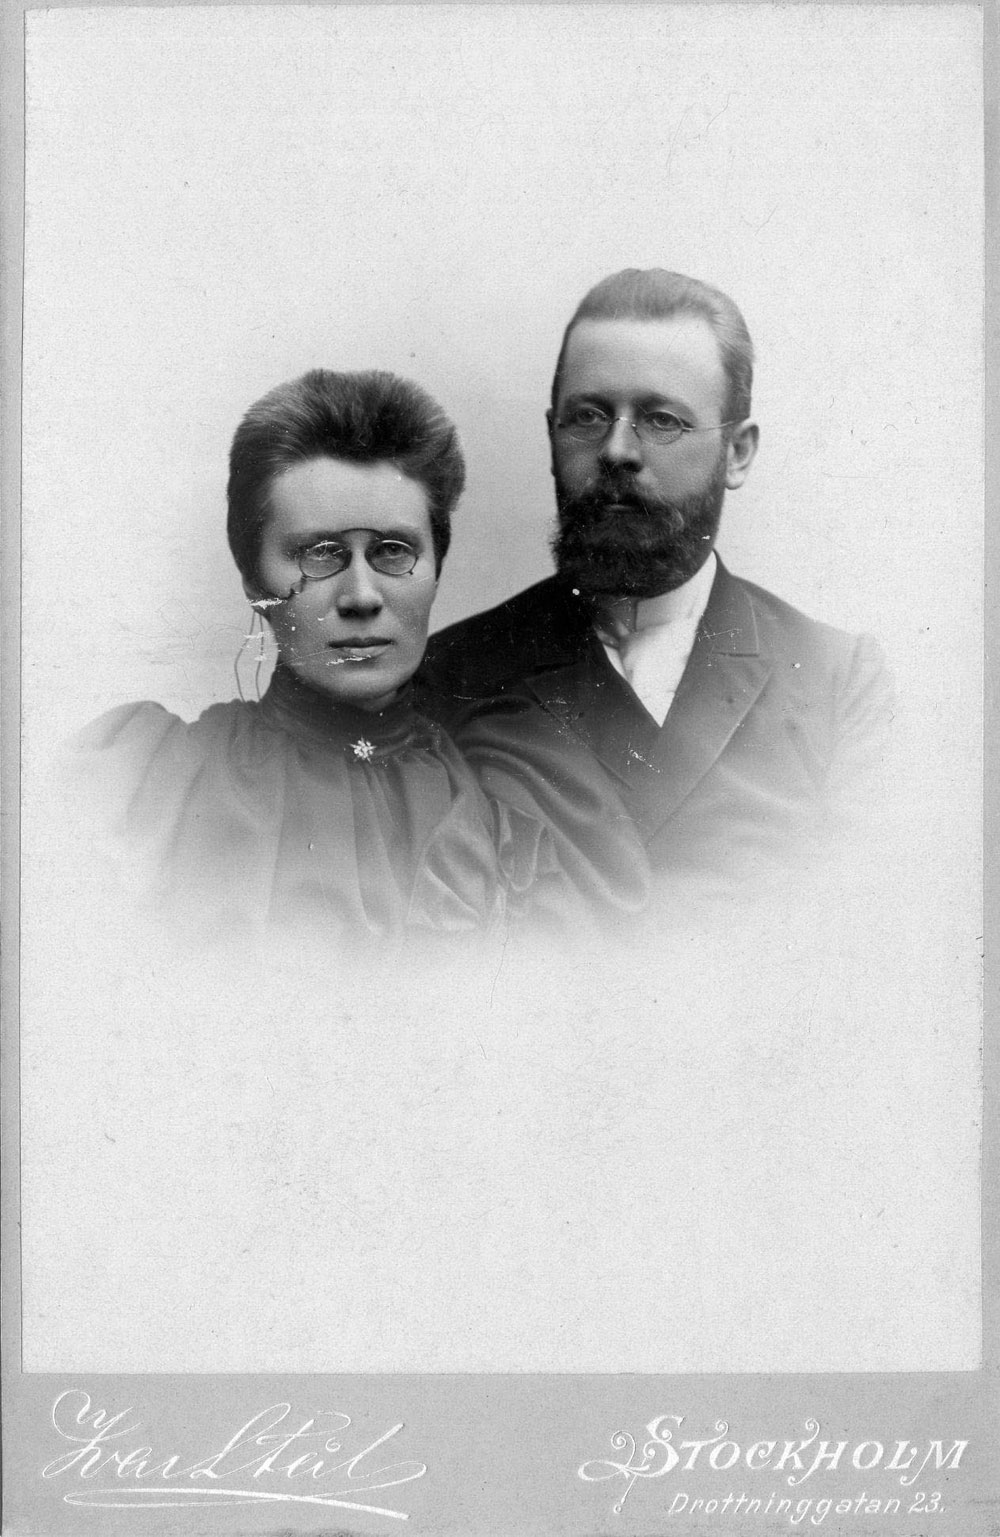 Wilhelm Hagelin and his wife Hilda Hagelin portrayed around 1900 in St. Petersburg.